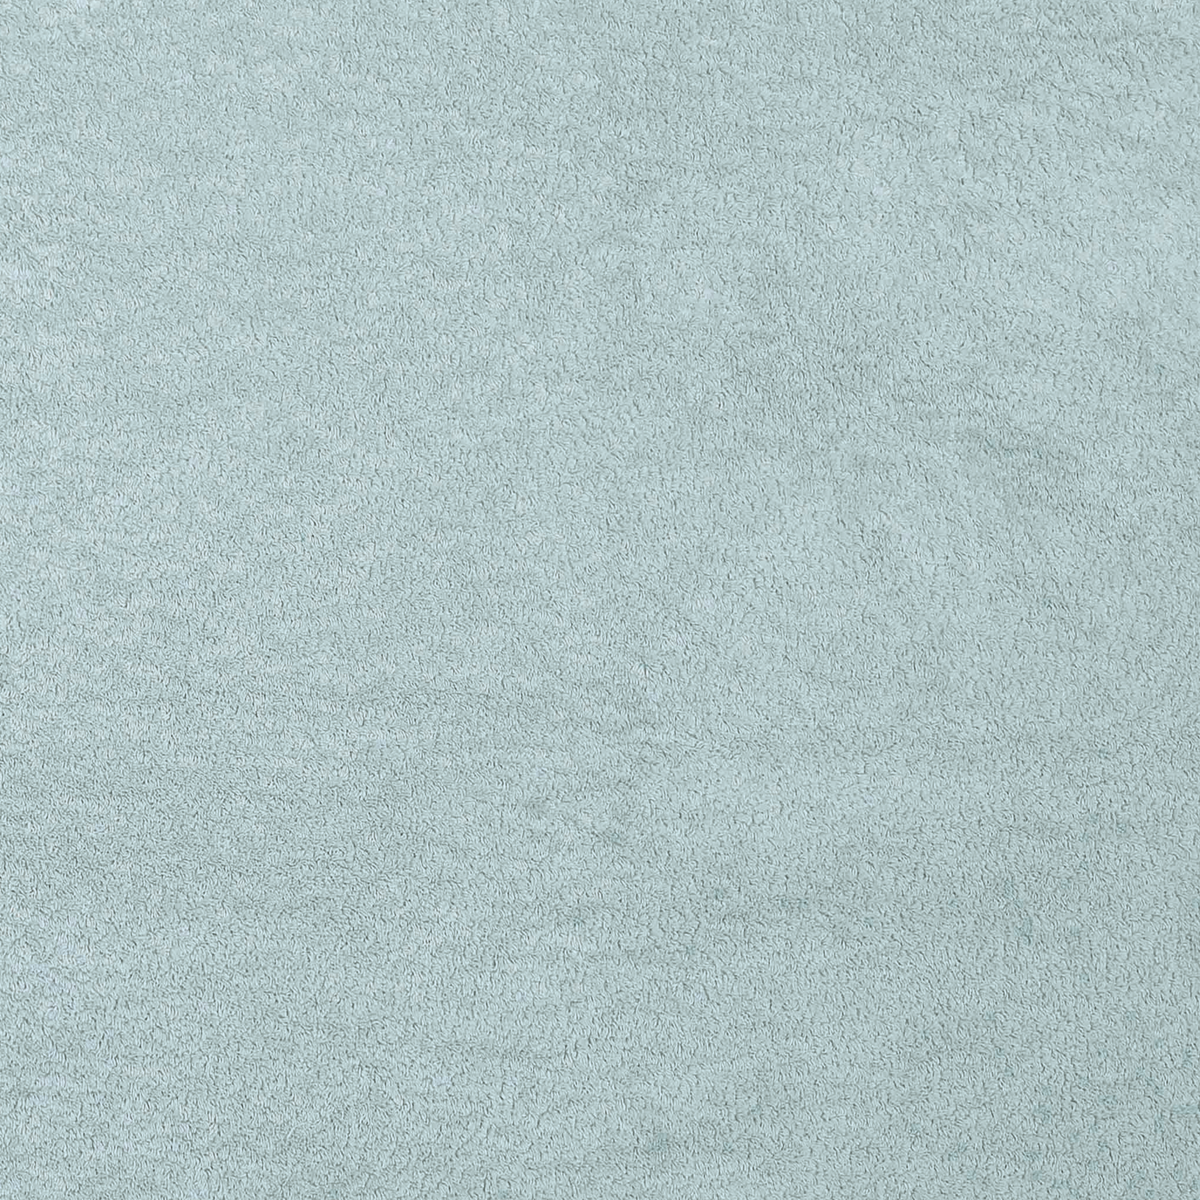 Fabric Closeup of Egoist Beach Towel in Sea Mist Color